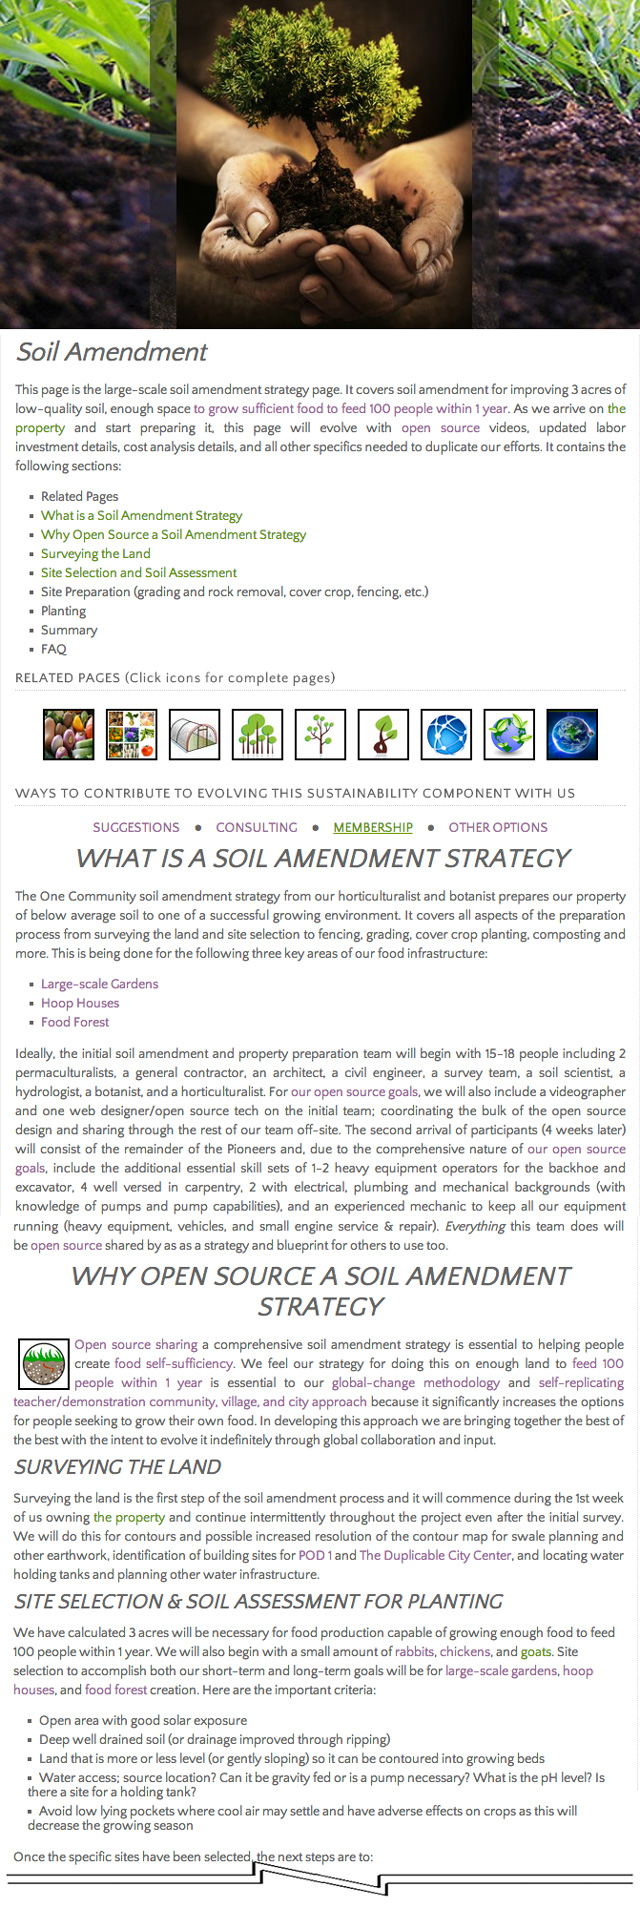 Soil amendment page in progress, One Community